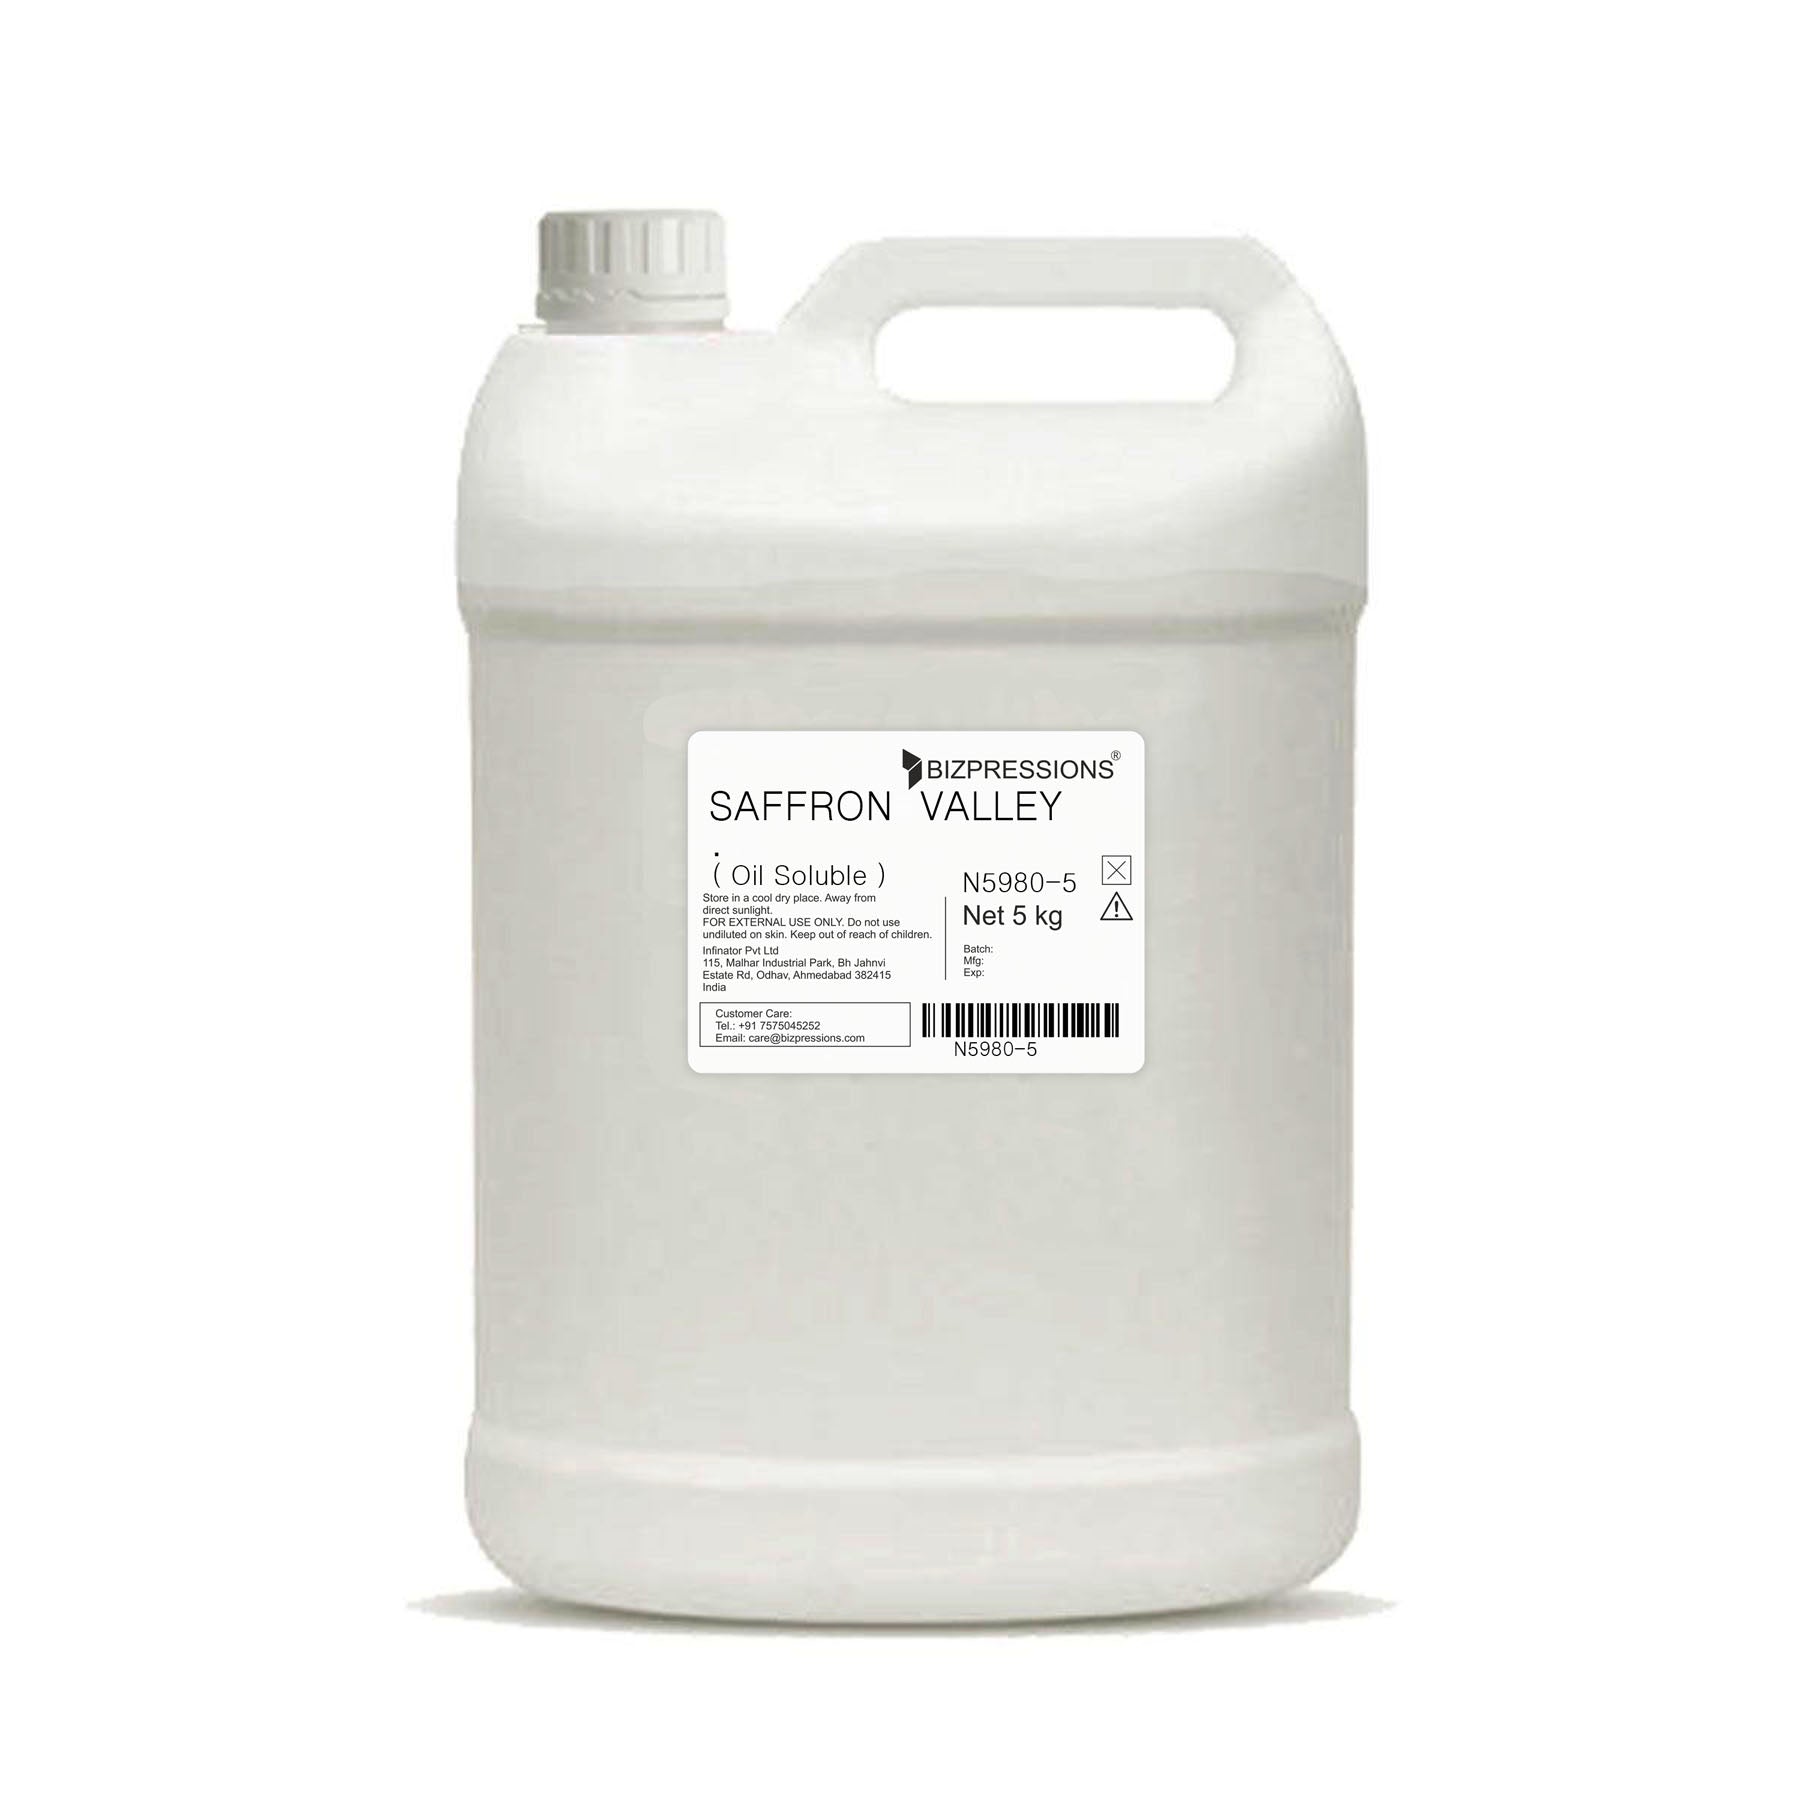 SAFFRON VALLEY - Fragrance ( Oil Soluble ) - 5 kg